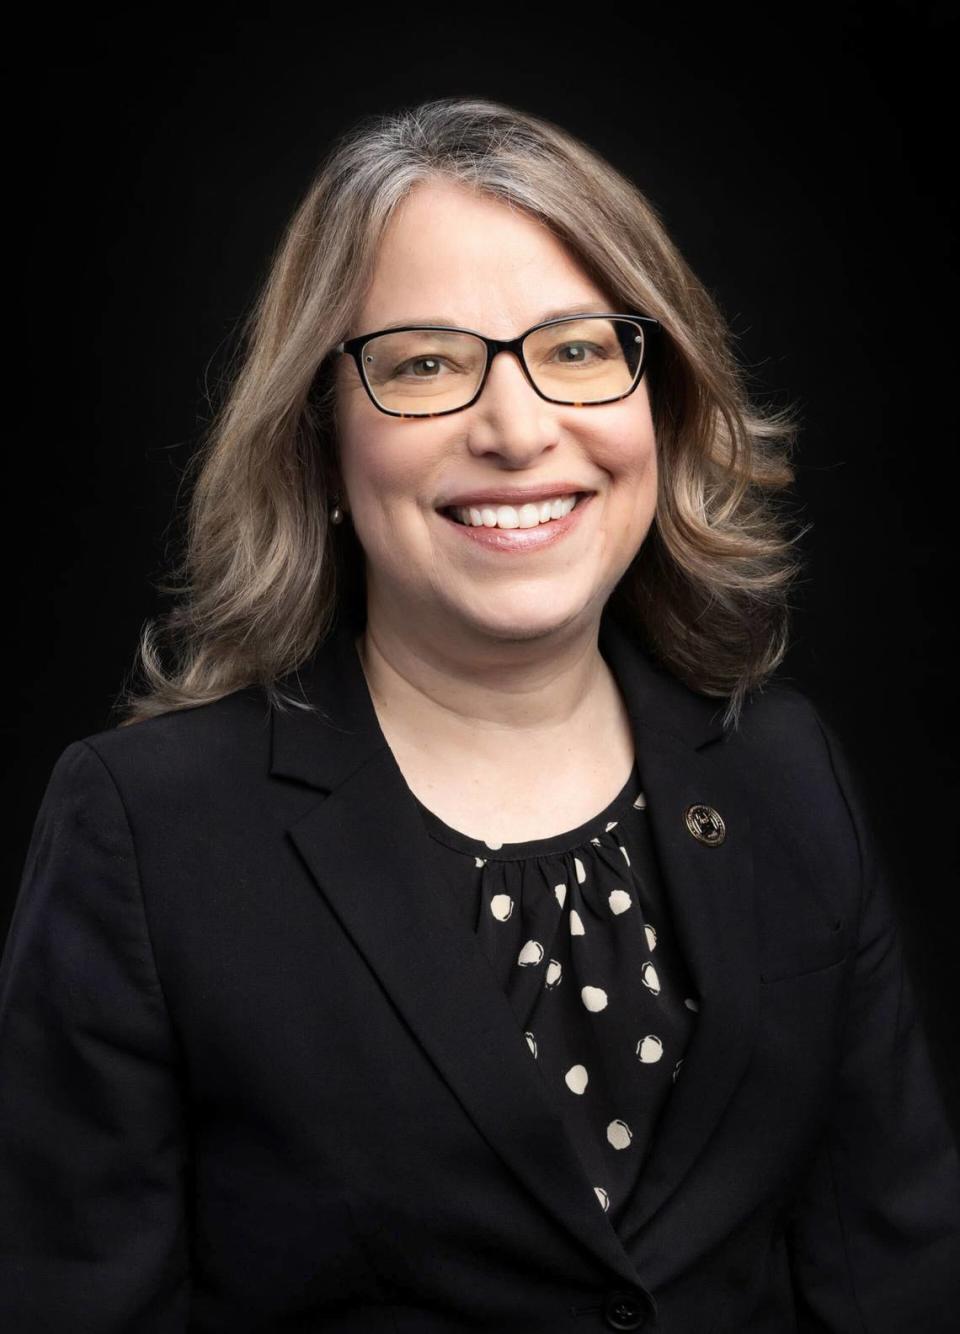 Heather Hulburt Norris is the interim chancellor of Appalachian State University.